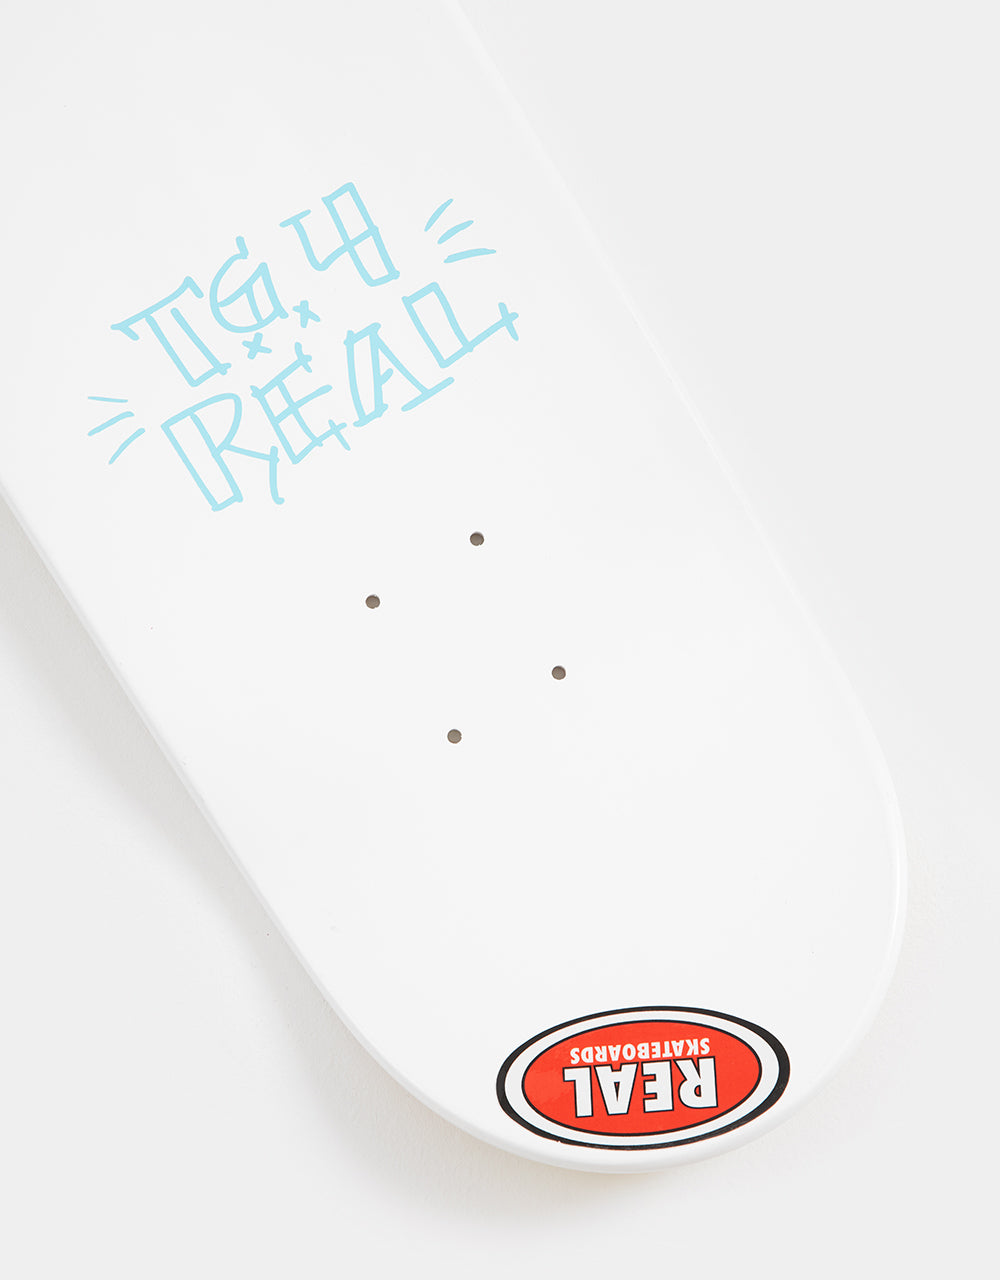 Real Tommy G Acrylics Skateboard Deck - 8.5"